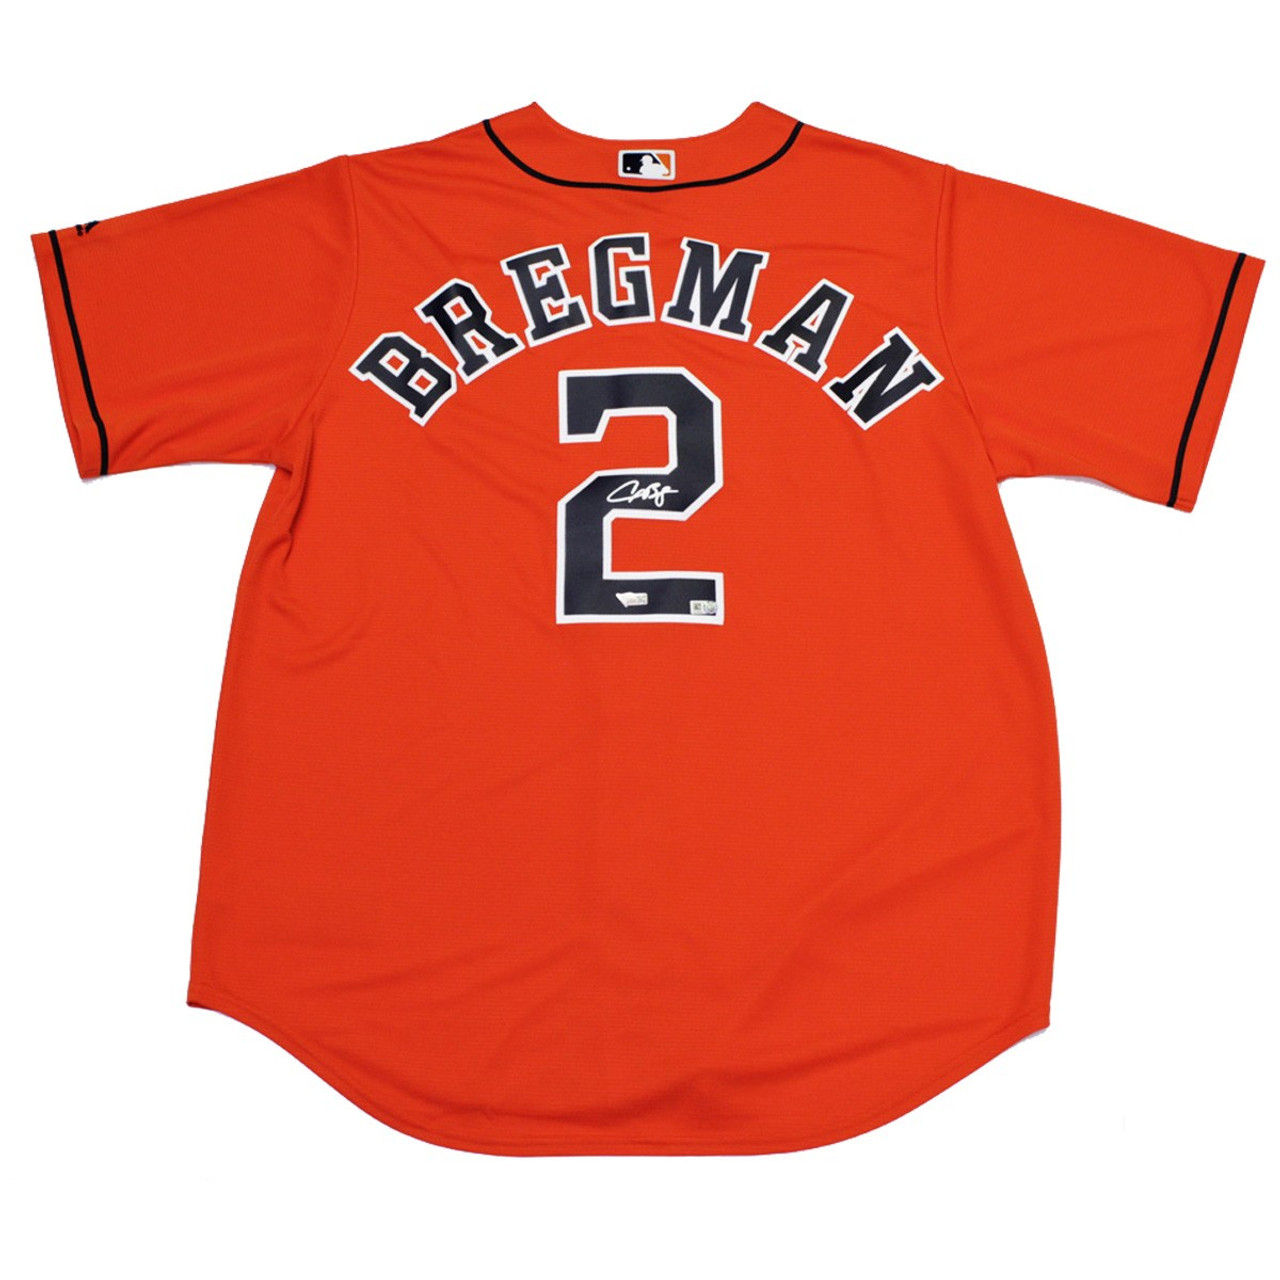 Alex Bregman Autographed Houston Astros Orange Baseball Jersey - Fanatics